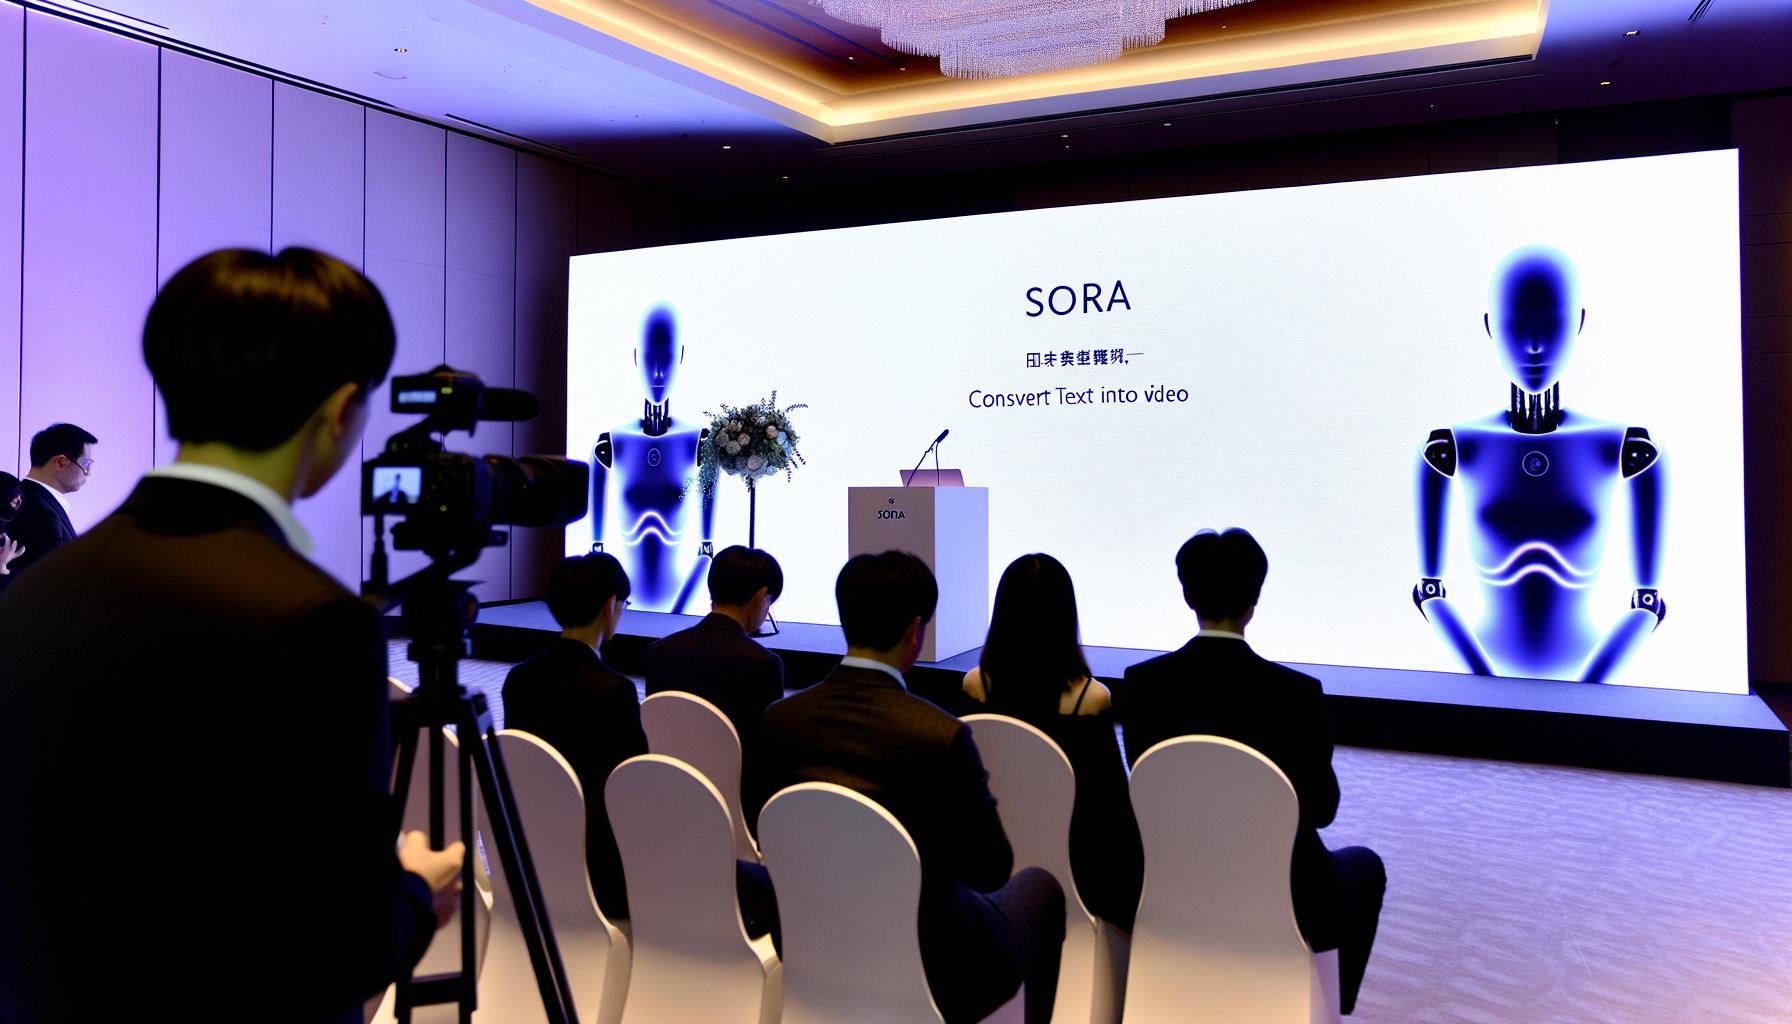 OpenAI launches Sora, a text-to-video AI model